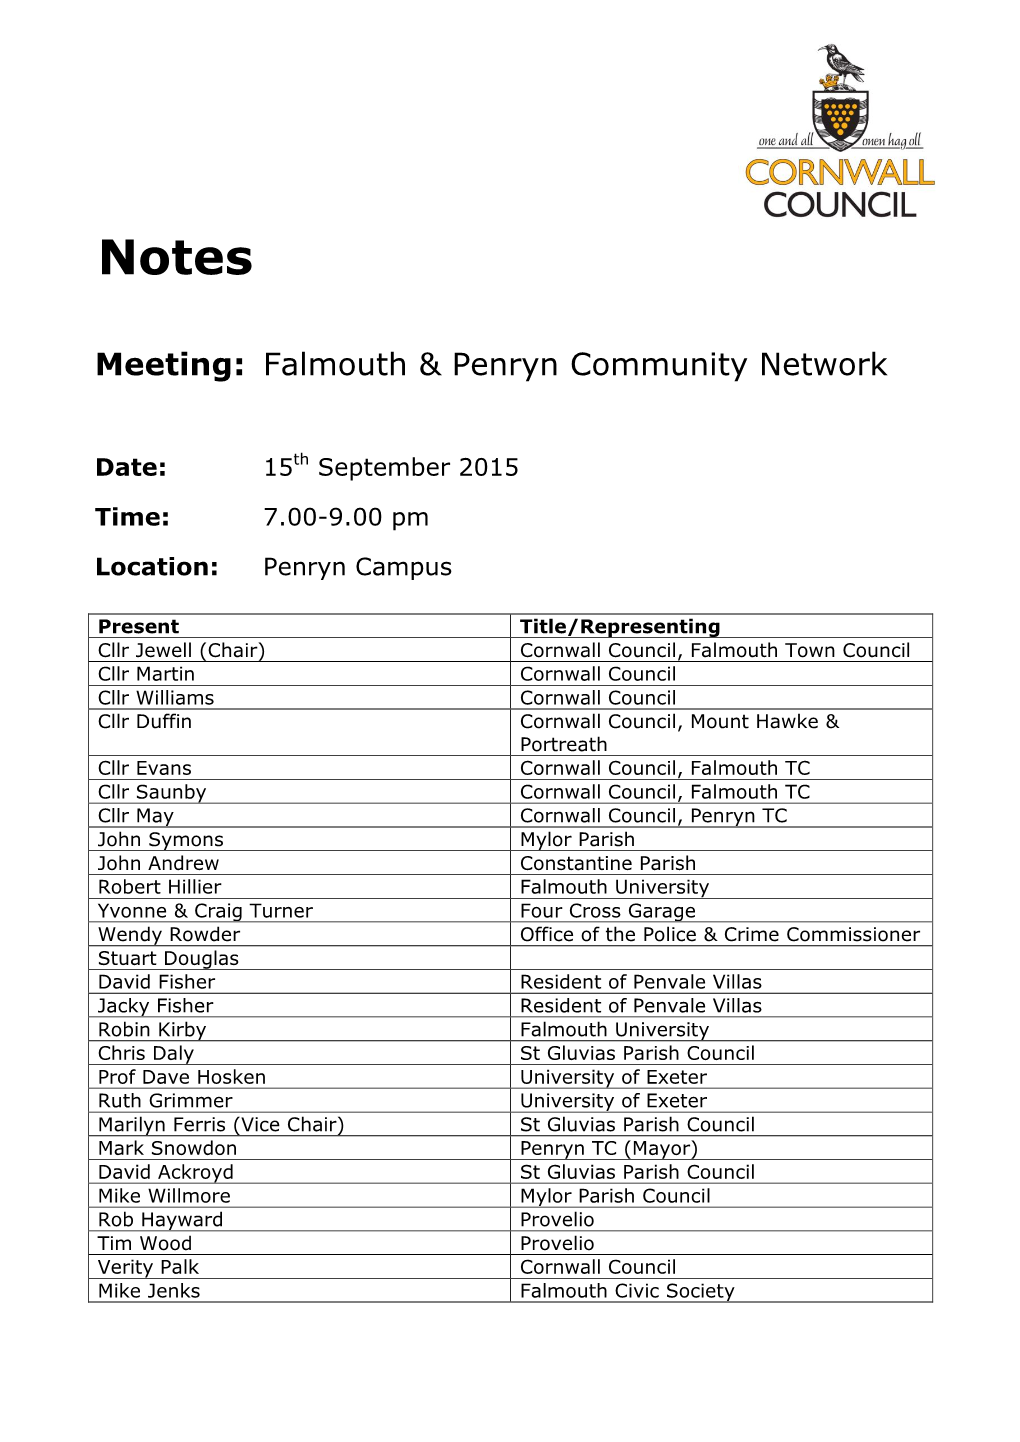 Falmouth & Penryn Community Network